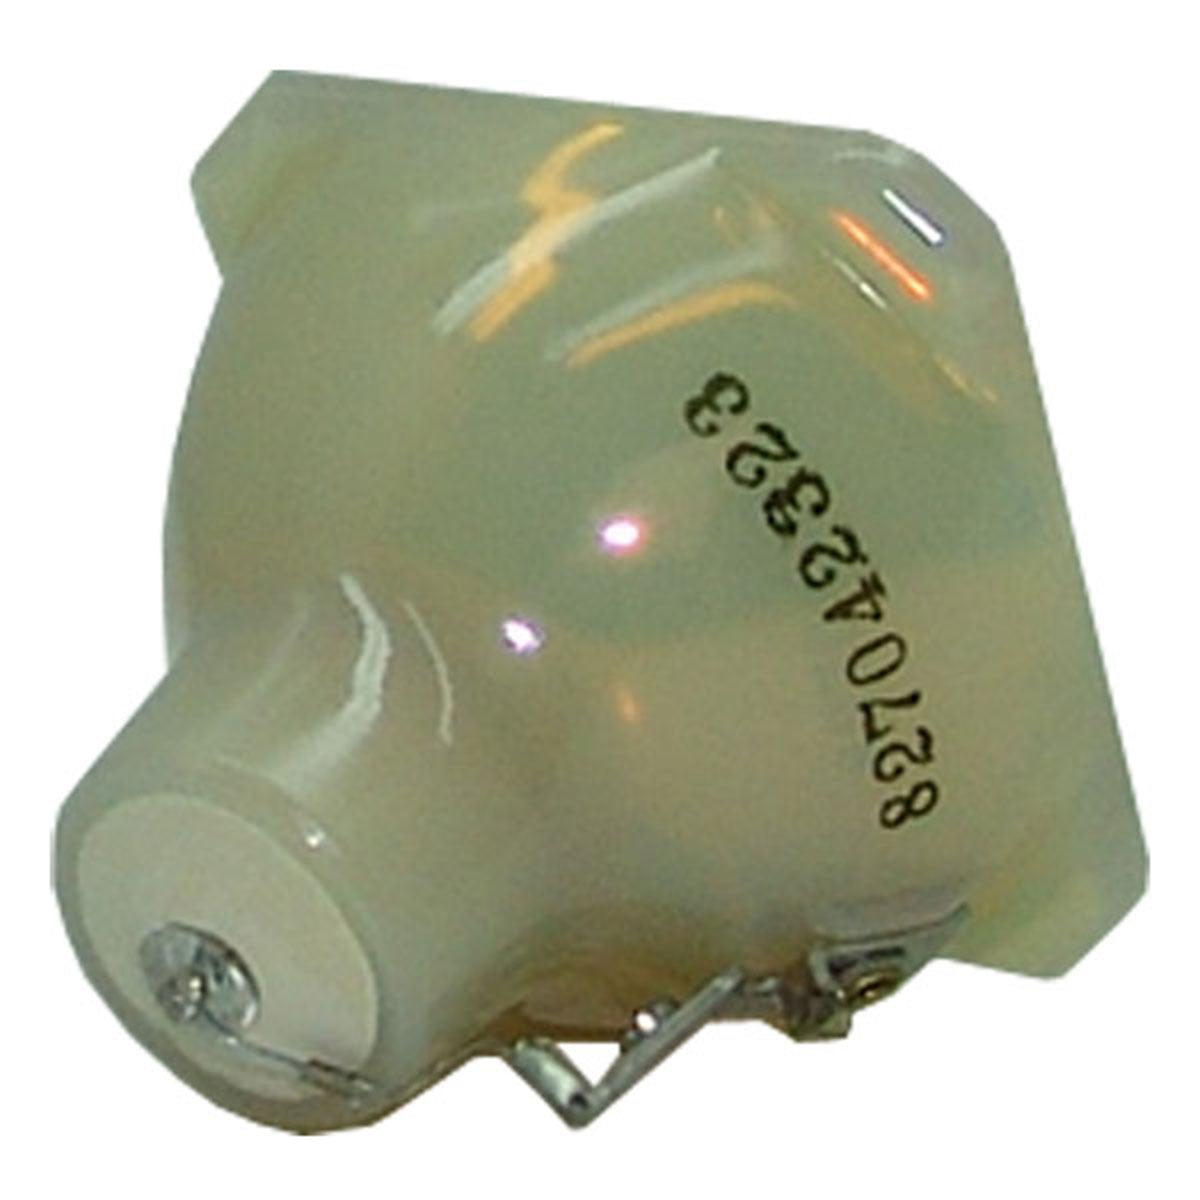 Viewsonic RLC-023 Osram Projector Bare Lamp